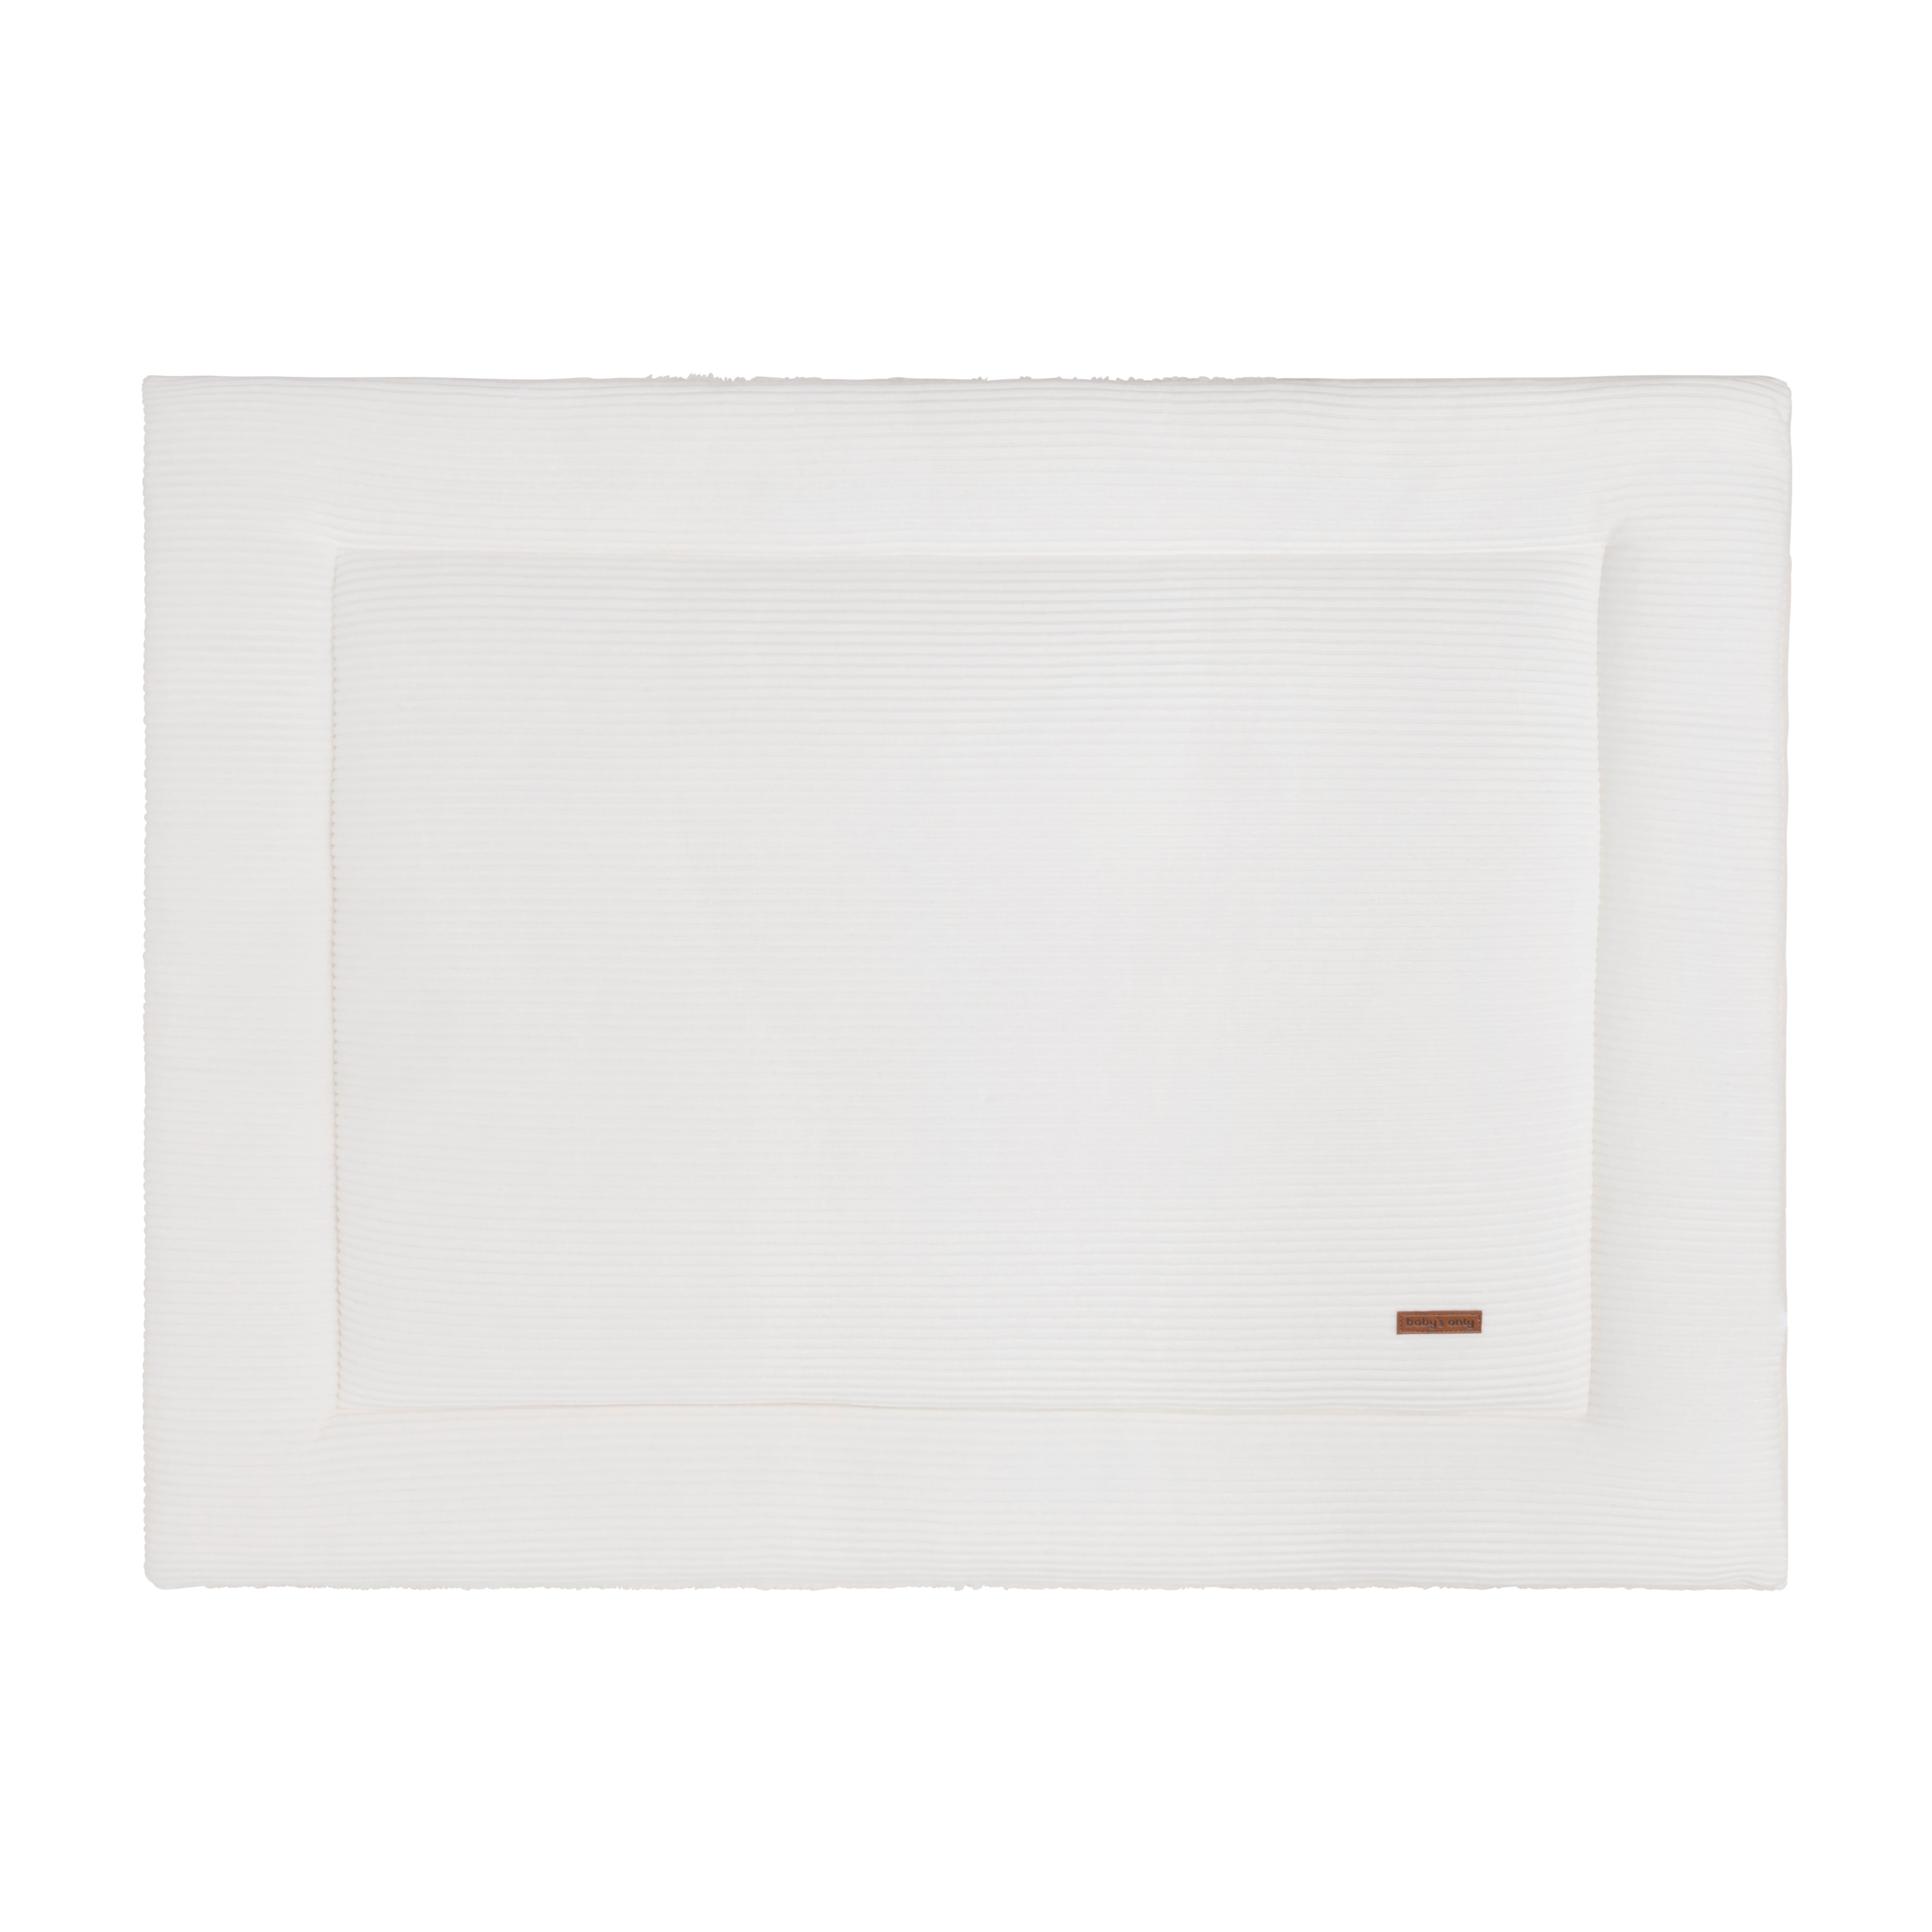 Playpen mat Sense white - 75x95